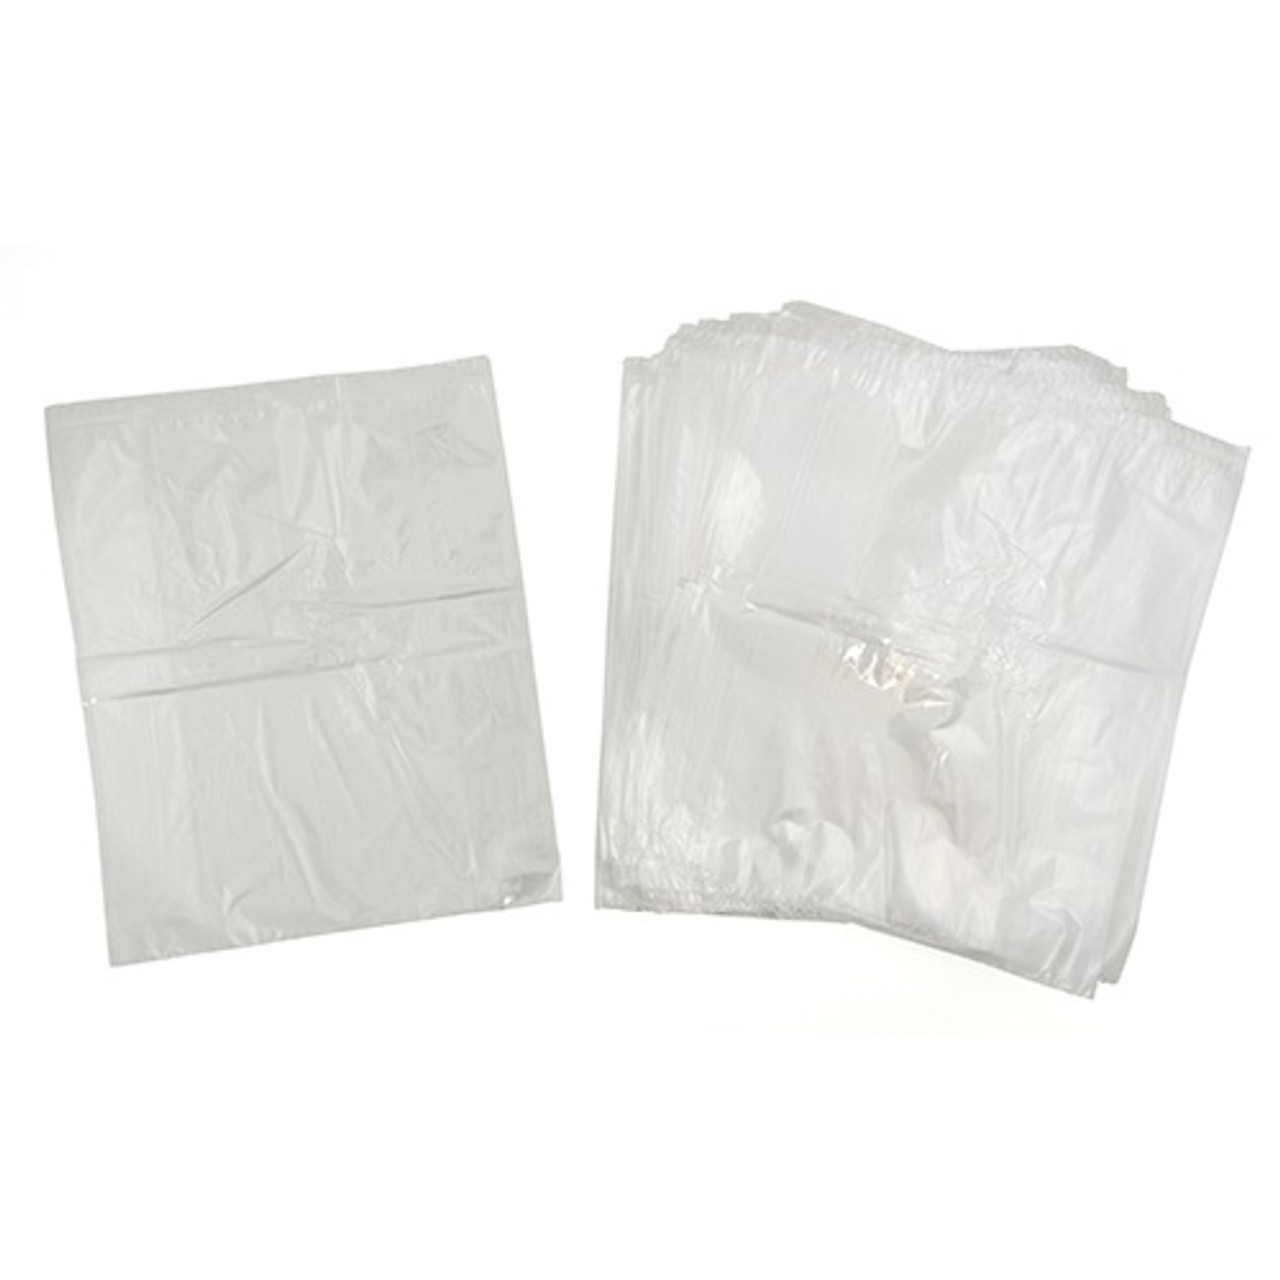 Hubco Protexo Cloth Soil Sample Bags 5” x 7” Box of 100